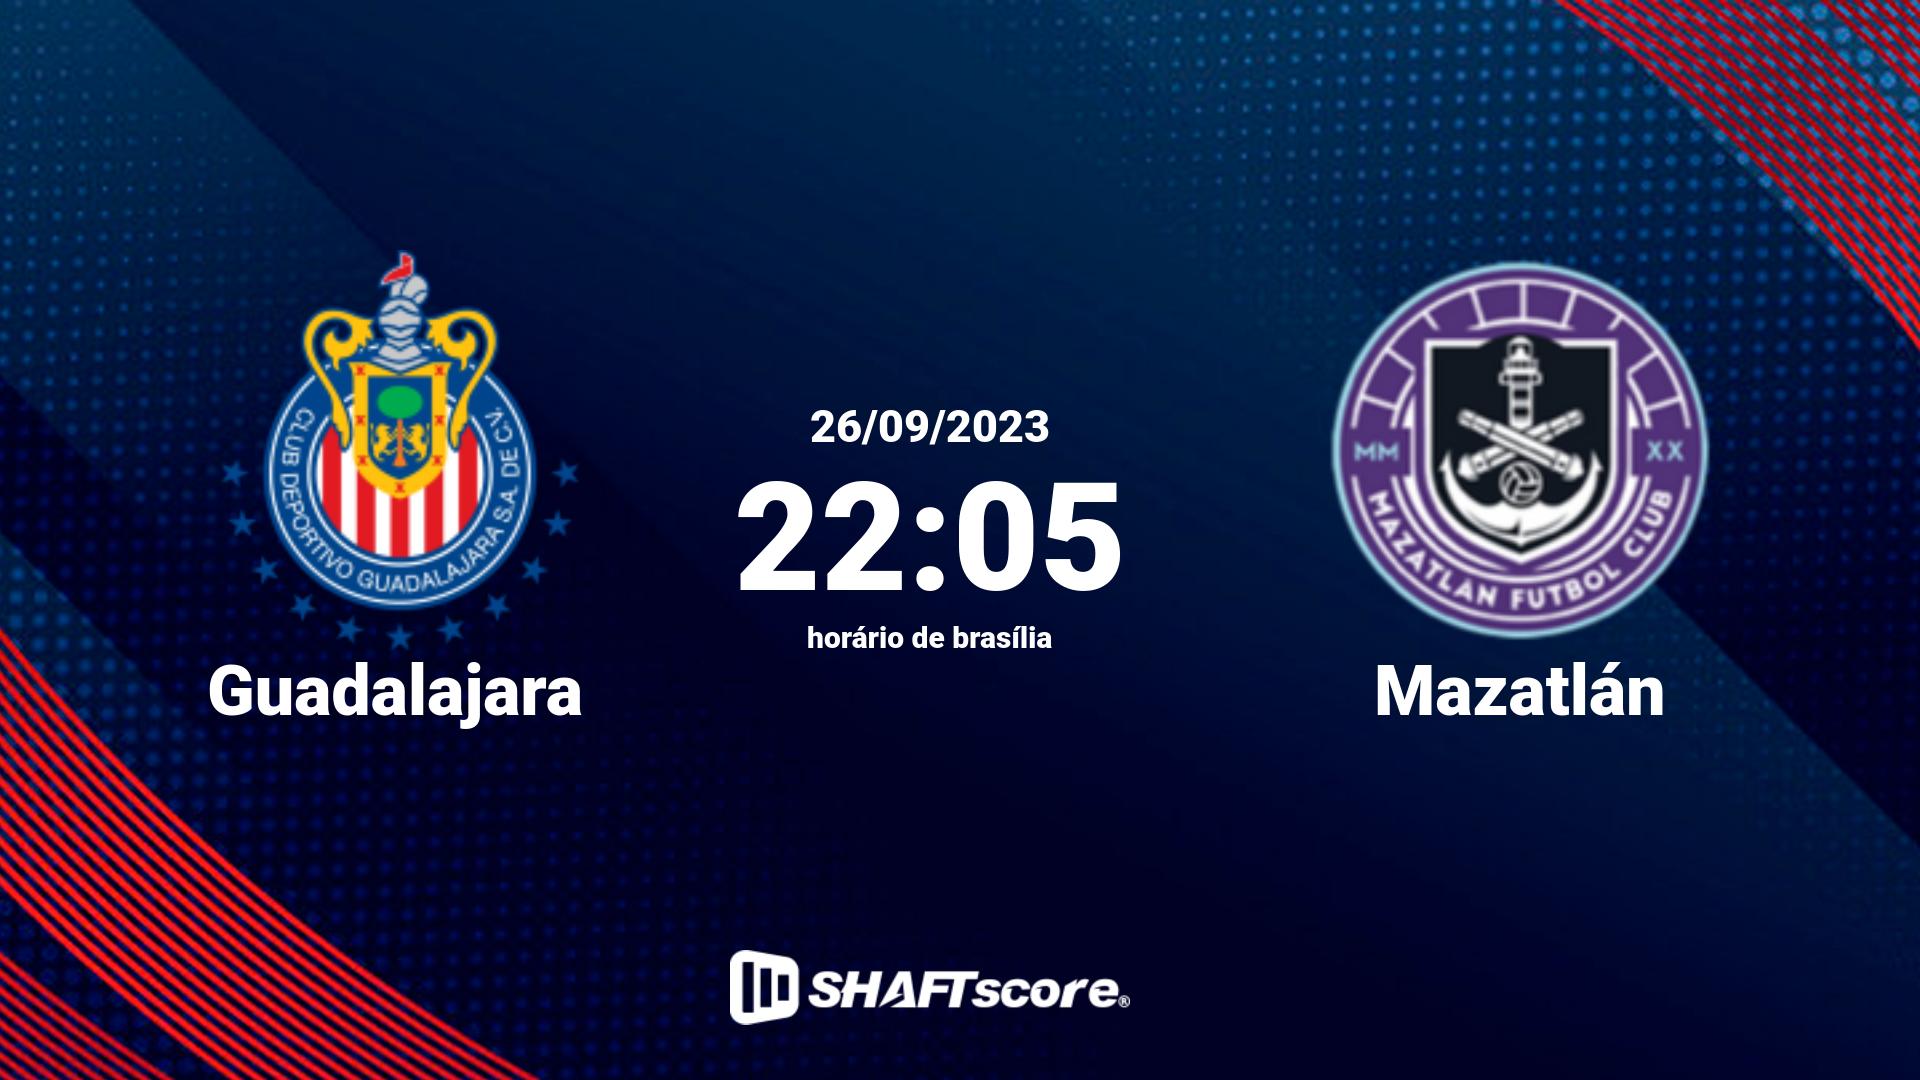 Estatísticas do jogo Guadalajara vs Mazatlán 26.09 22:05